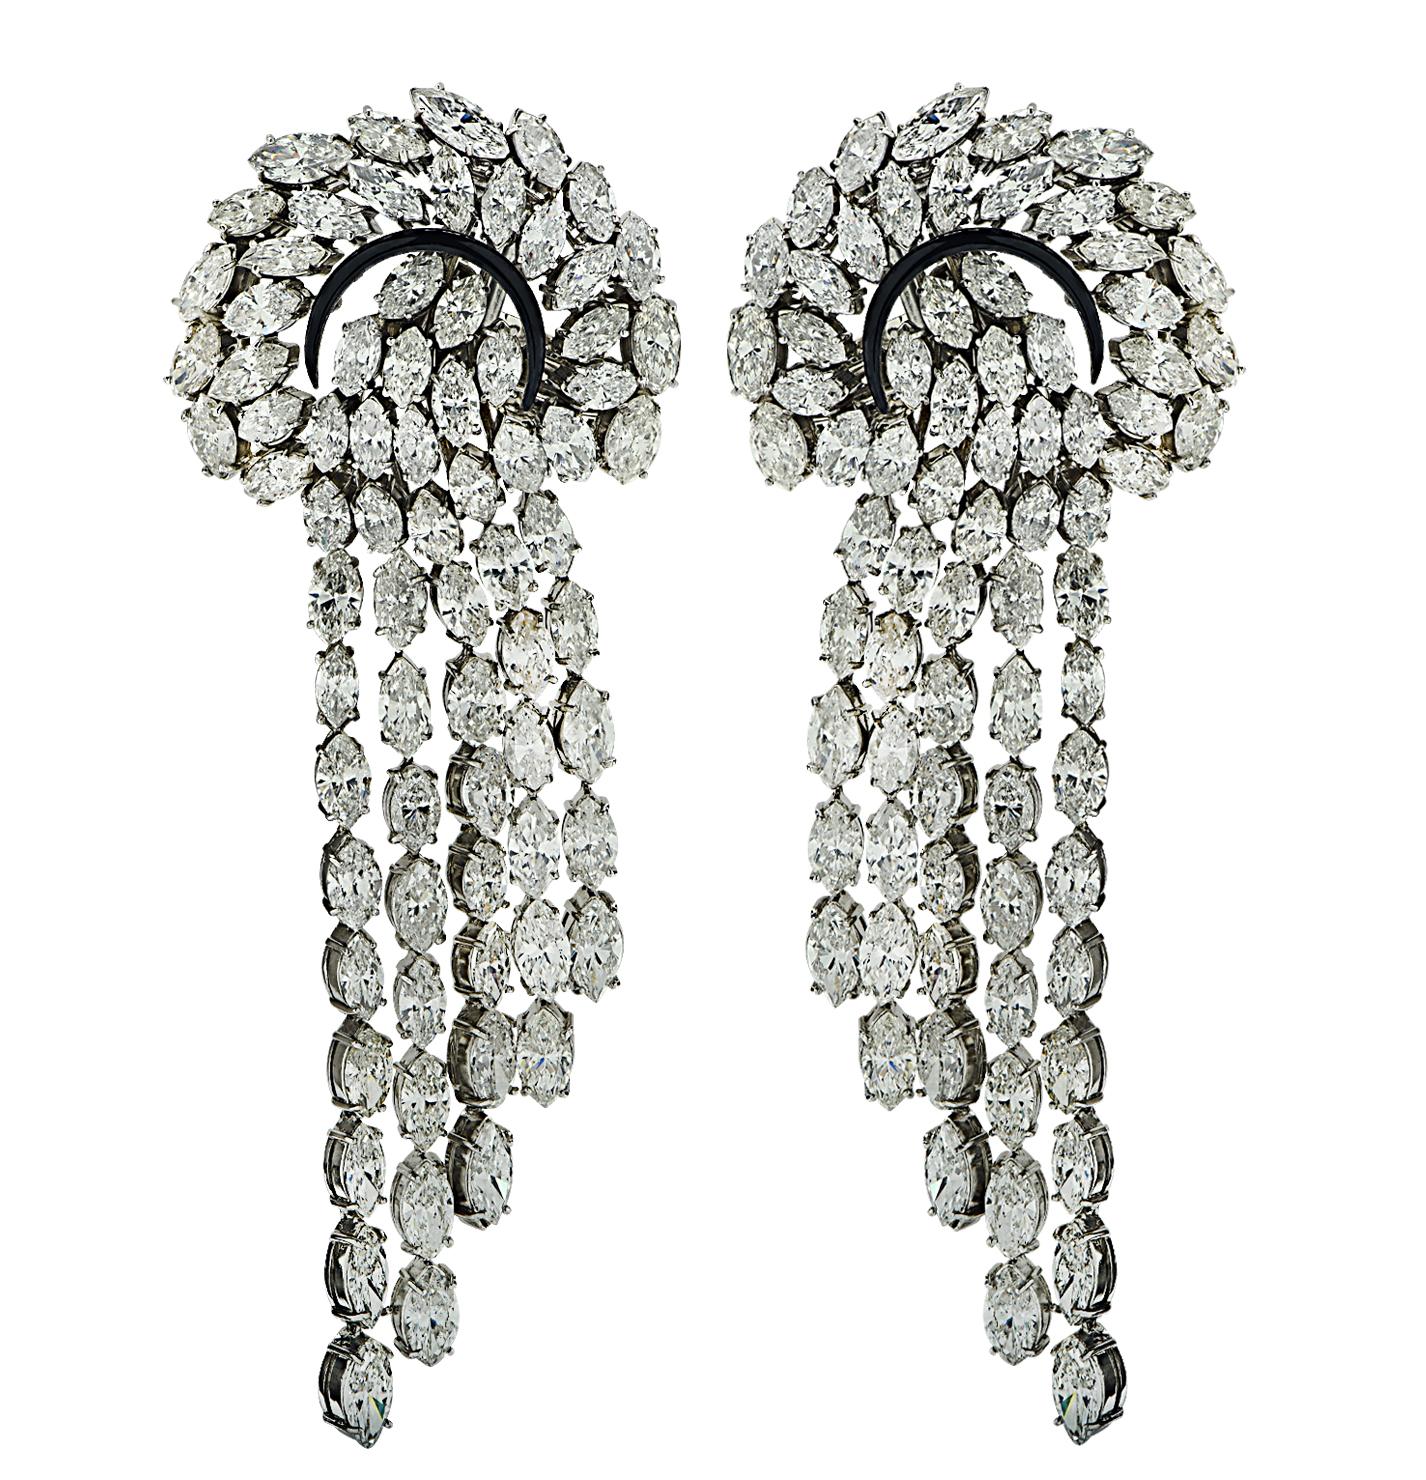 Marquise Cut Vivid Diamonds 59.00 Carat Diamond Chandelier Earrings